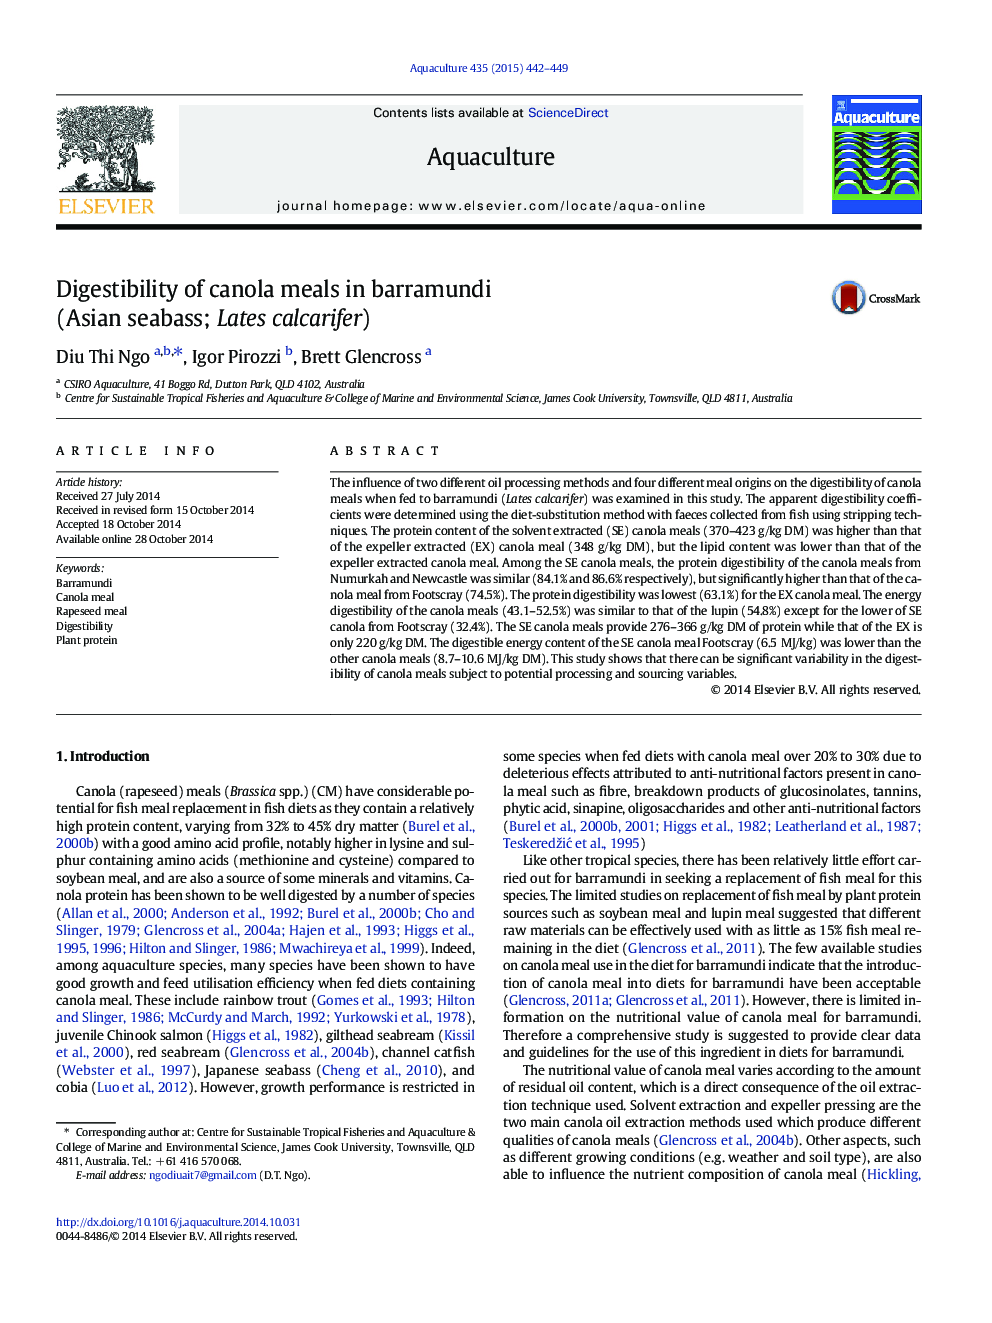 Digestibility of canola meals in barramundi (Asian seabass; Lates calcarifer)